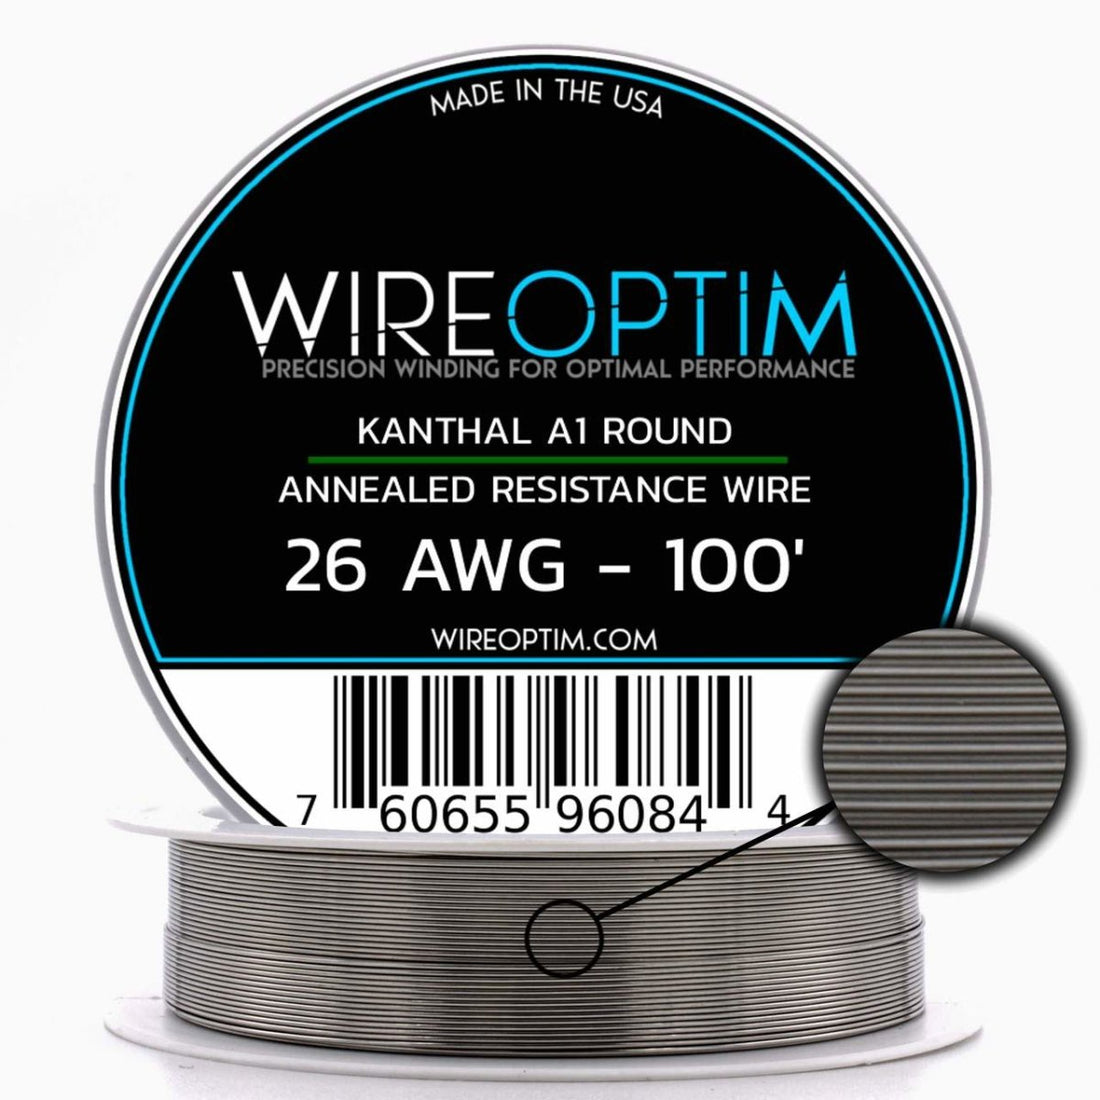 Wireoptim - Kit de Herramientas de Joyeria - Accesorios Vapeo de